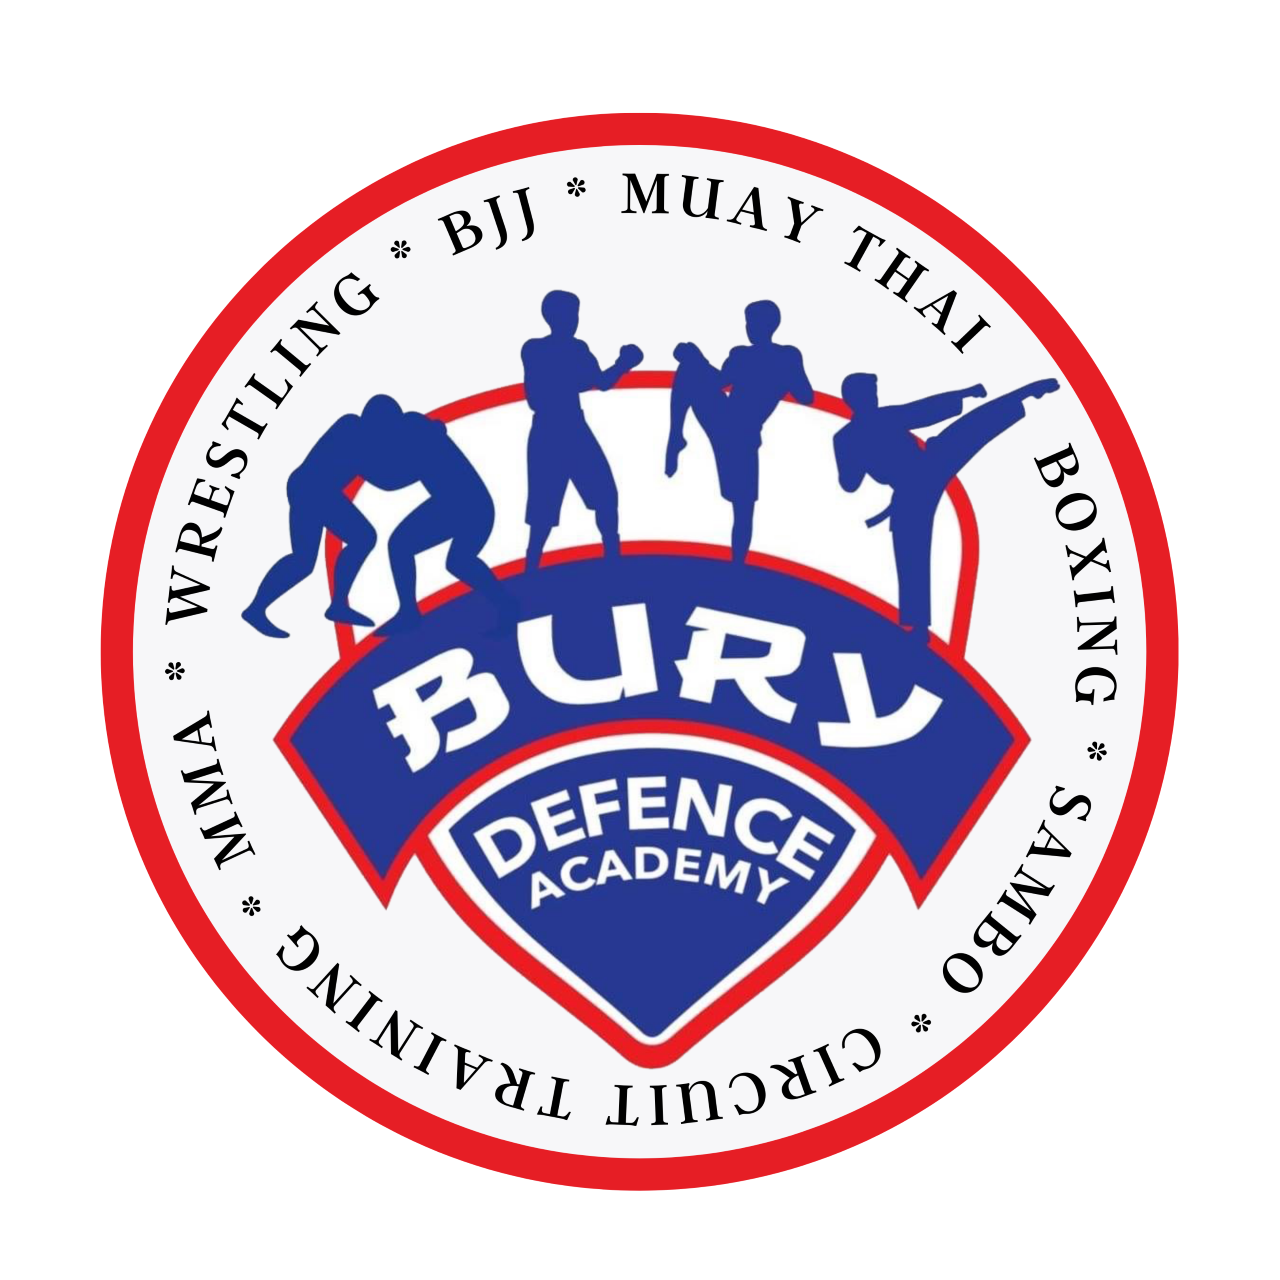 Bury Defence Academy